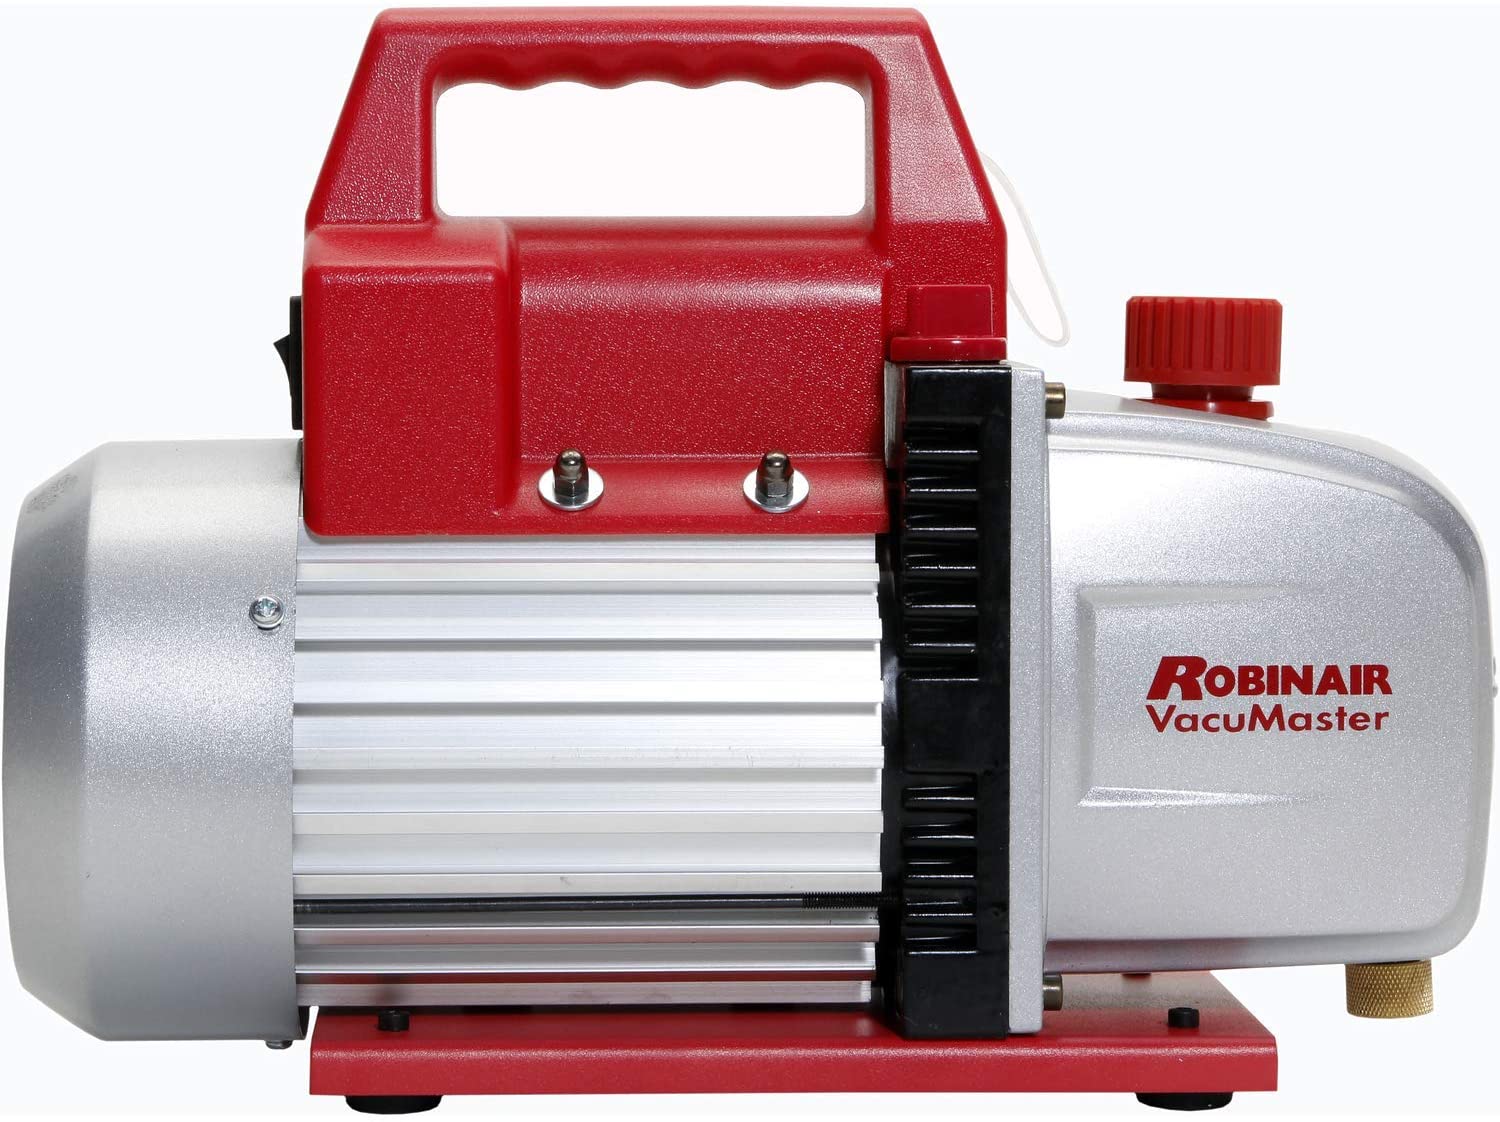 Photo 1 of Robinair 15500 VacuMaster Economy Vacuum Pump  2Stage 5 CFM  Red
BUY AS IS